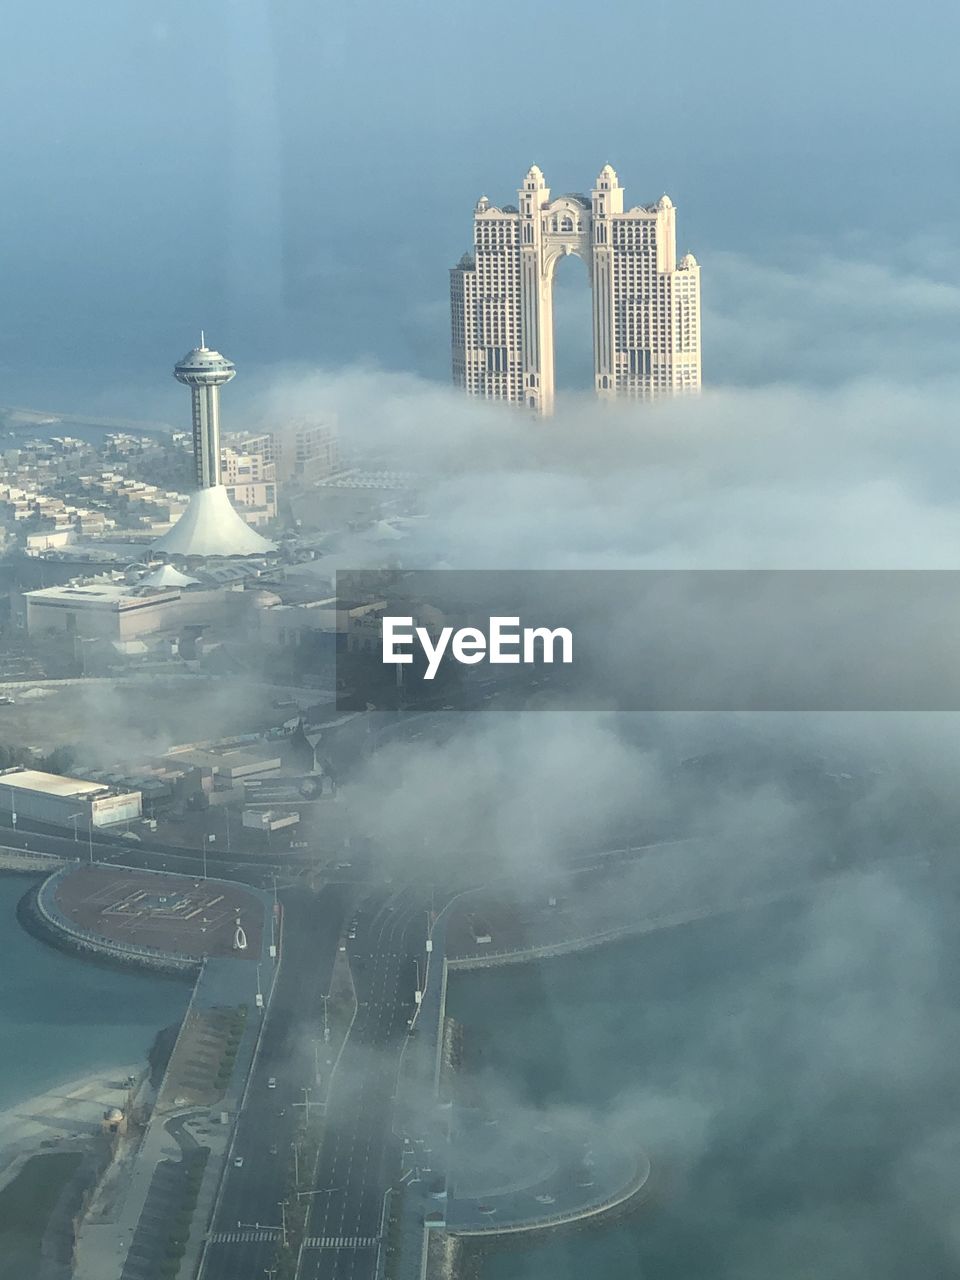 City and foggy 